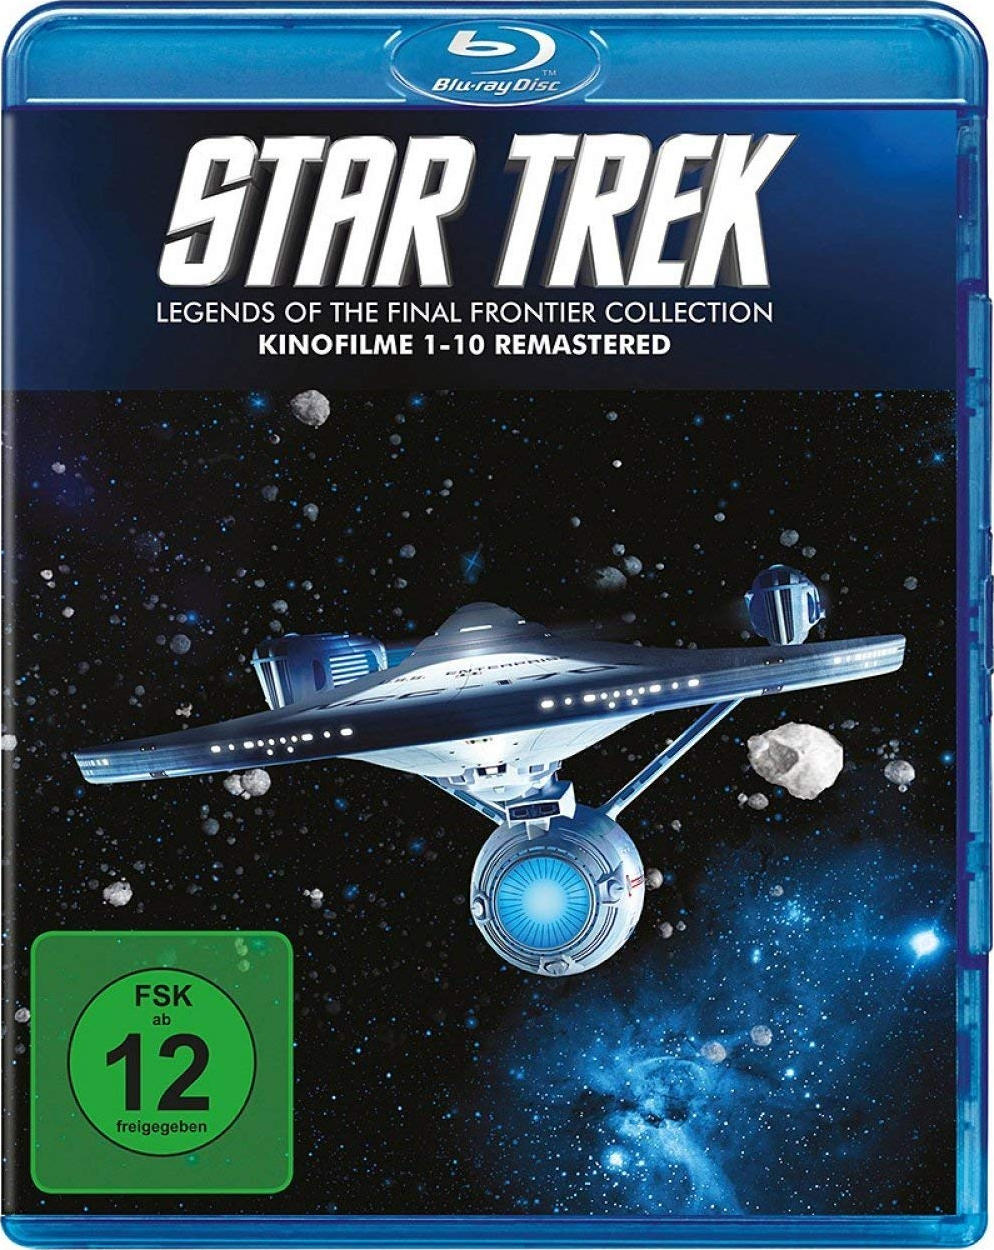 1 - 10: Remastered Star Blu-ray Trek